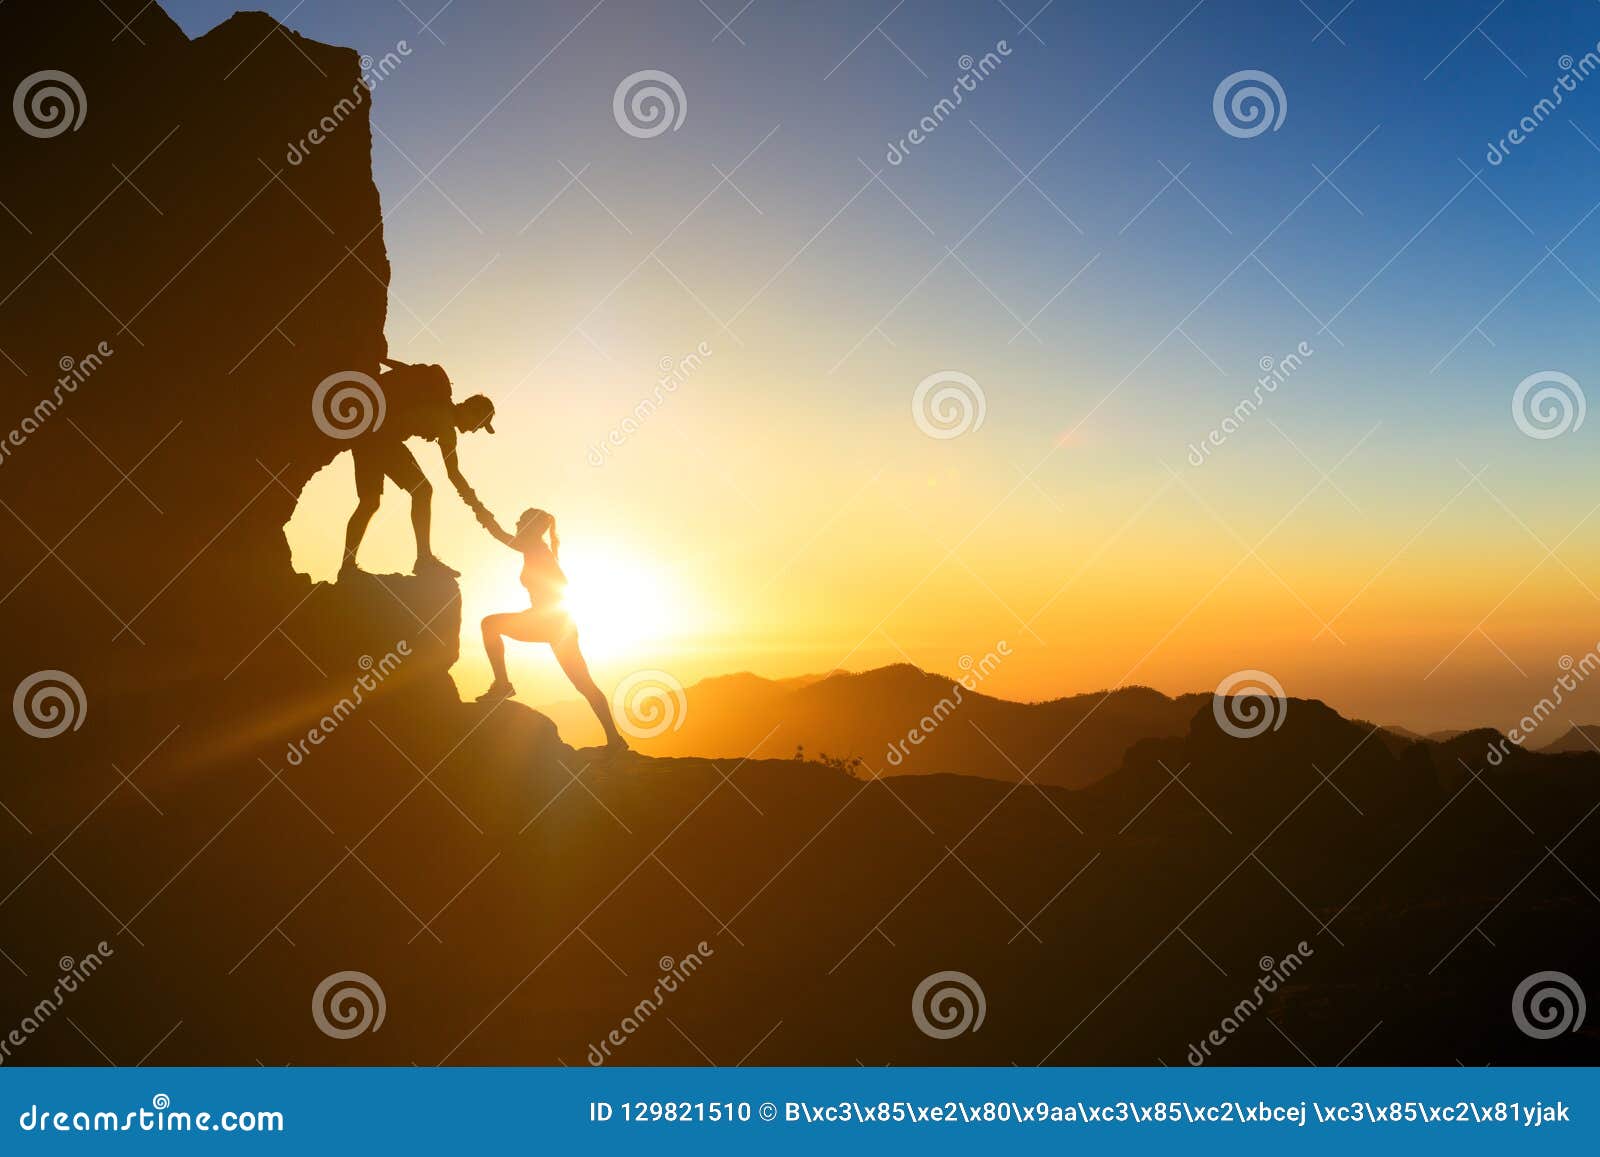 teamwork couple climbing helping hand